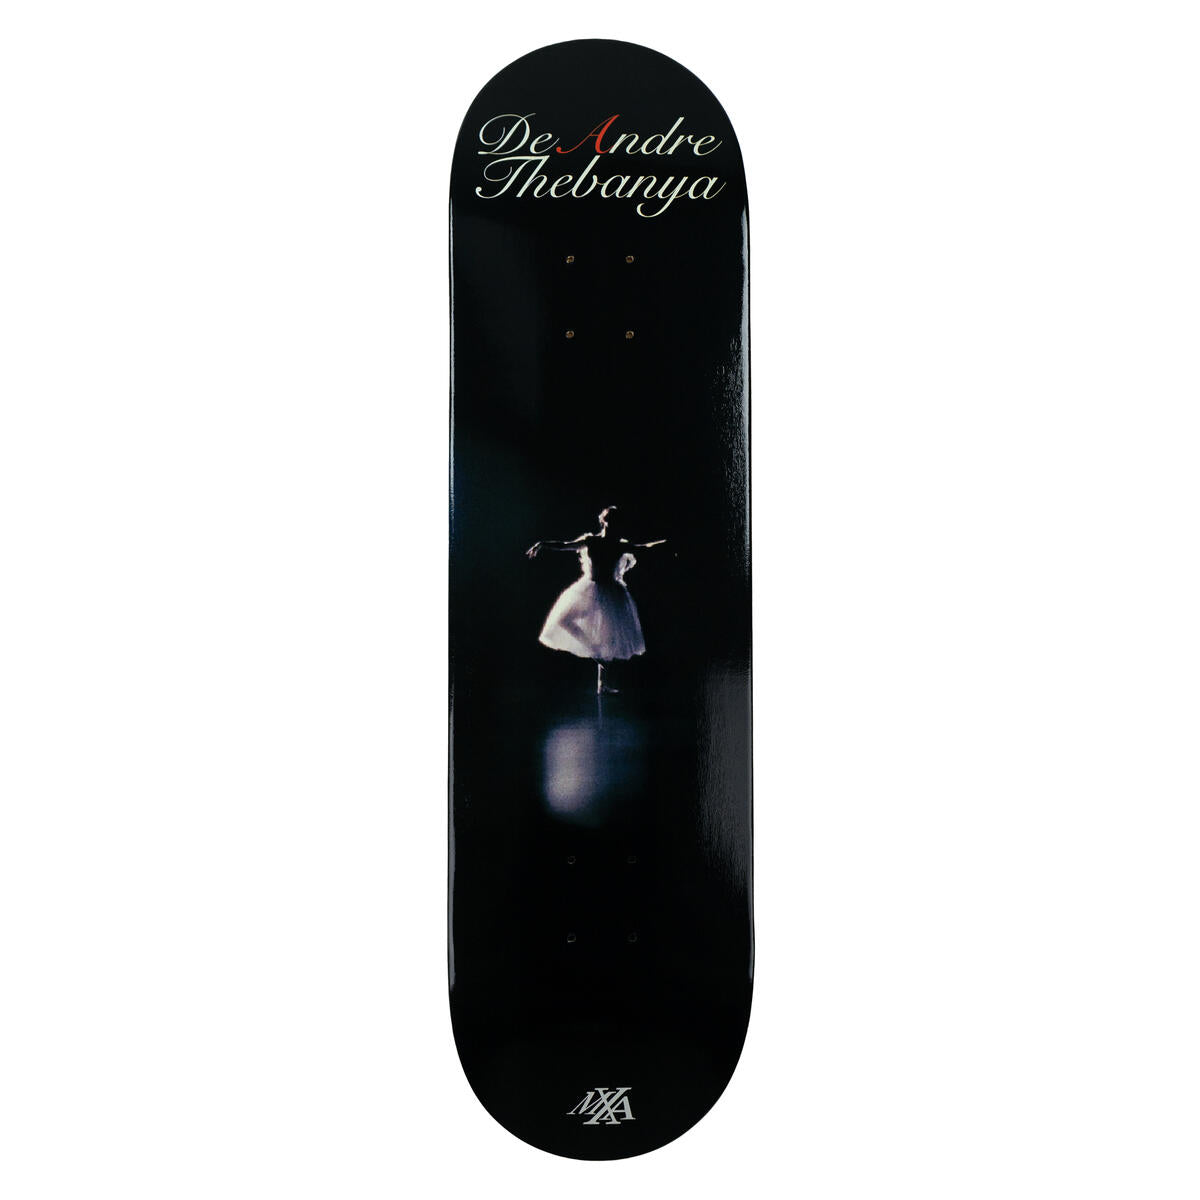 Maxallure skateboards Movie Series Deandre Thebanya deck